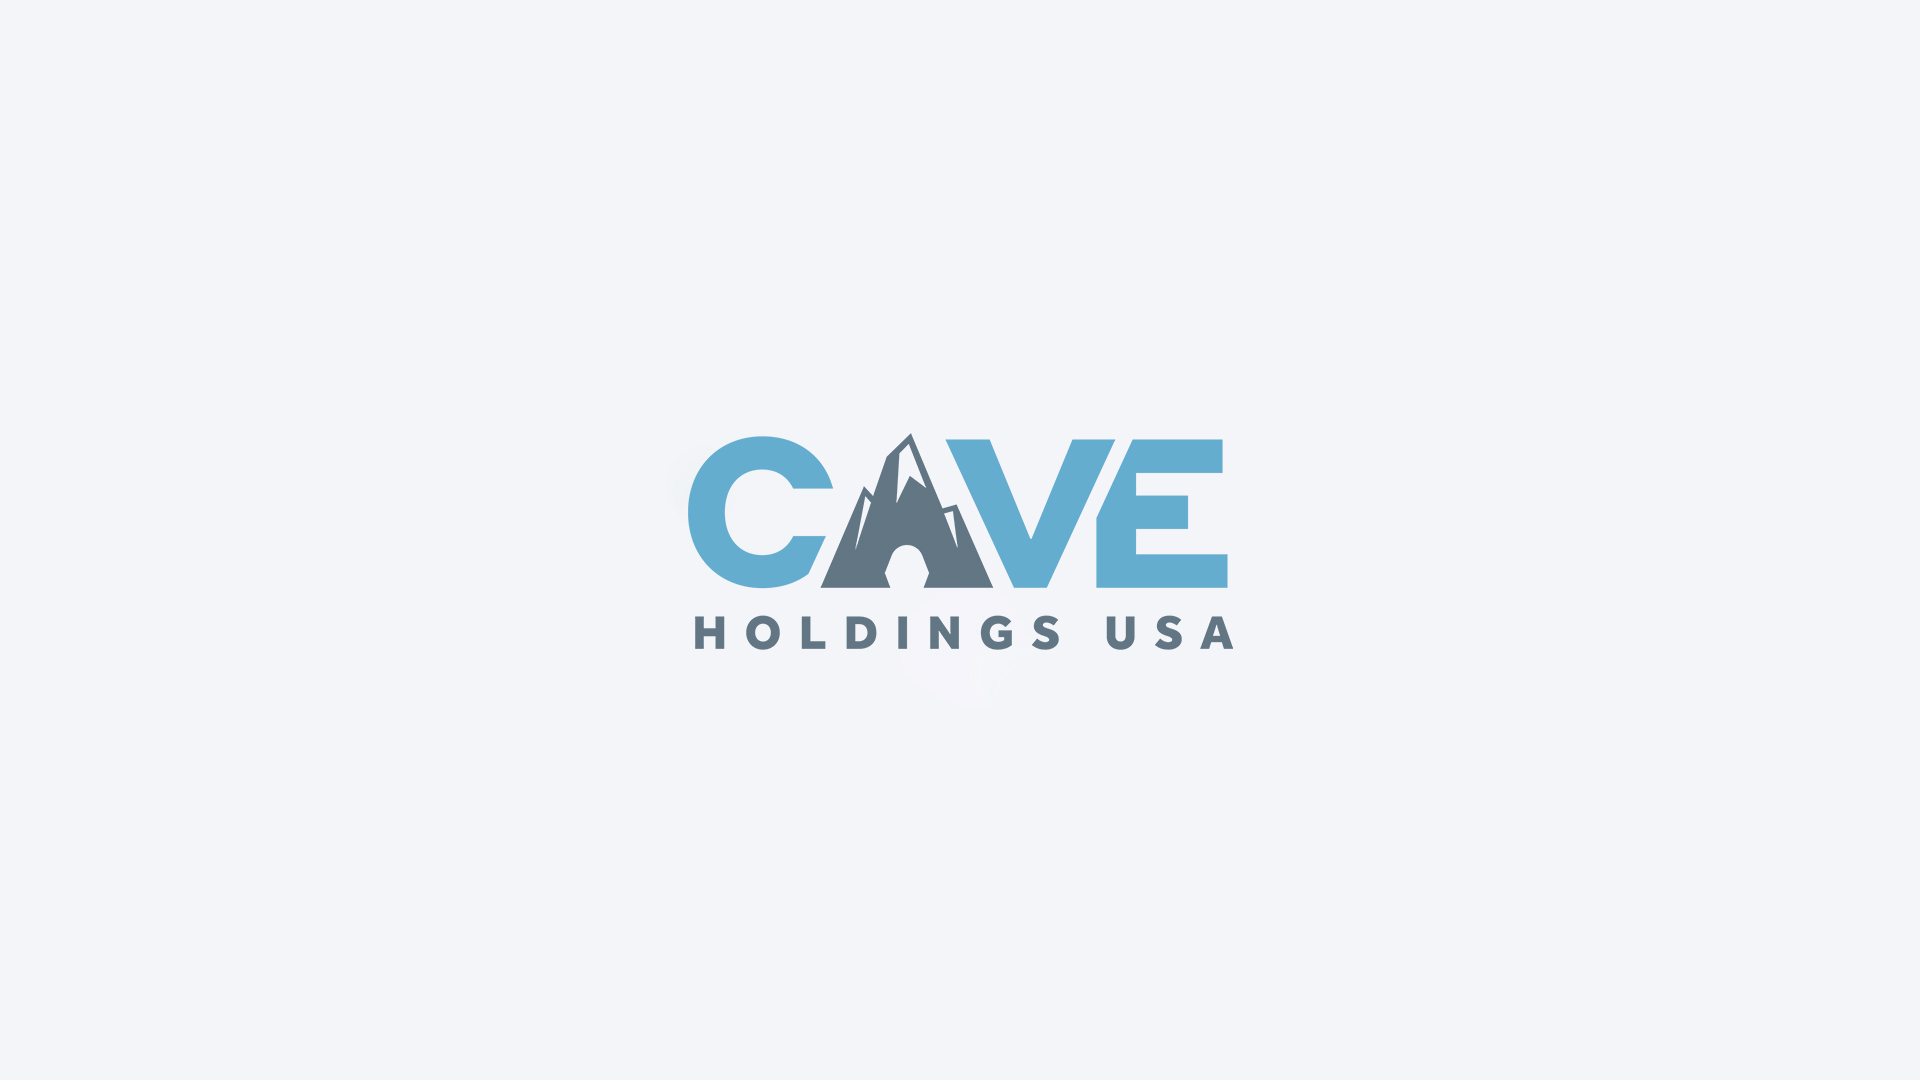 Cave Holdings USA Inc. joins the Roboze 3D Parts Network